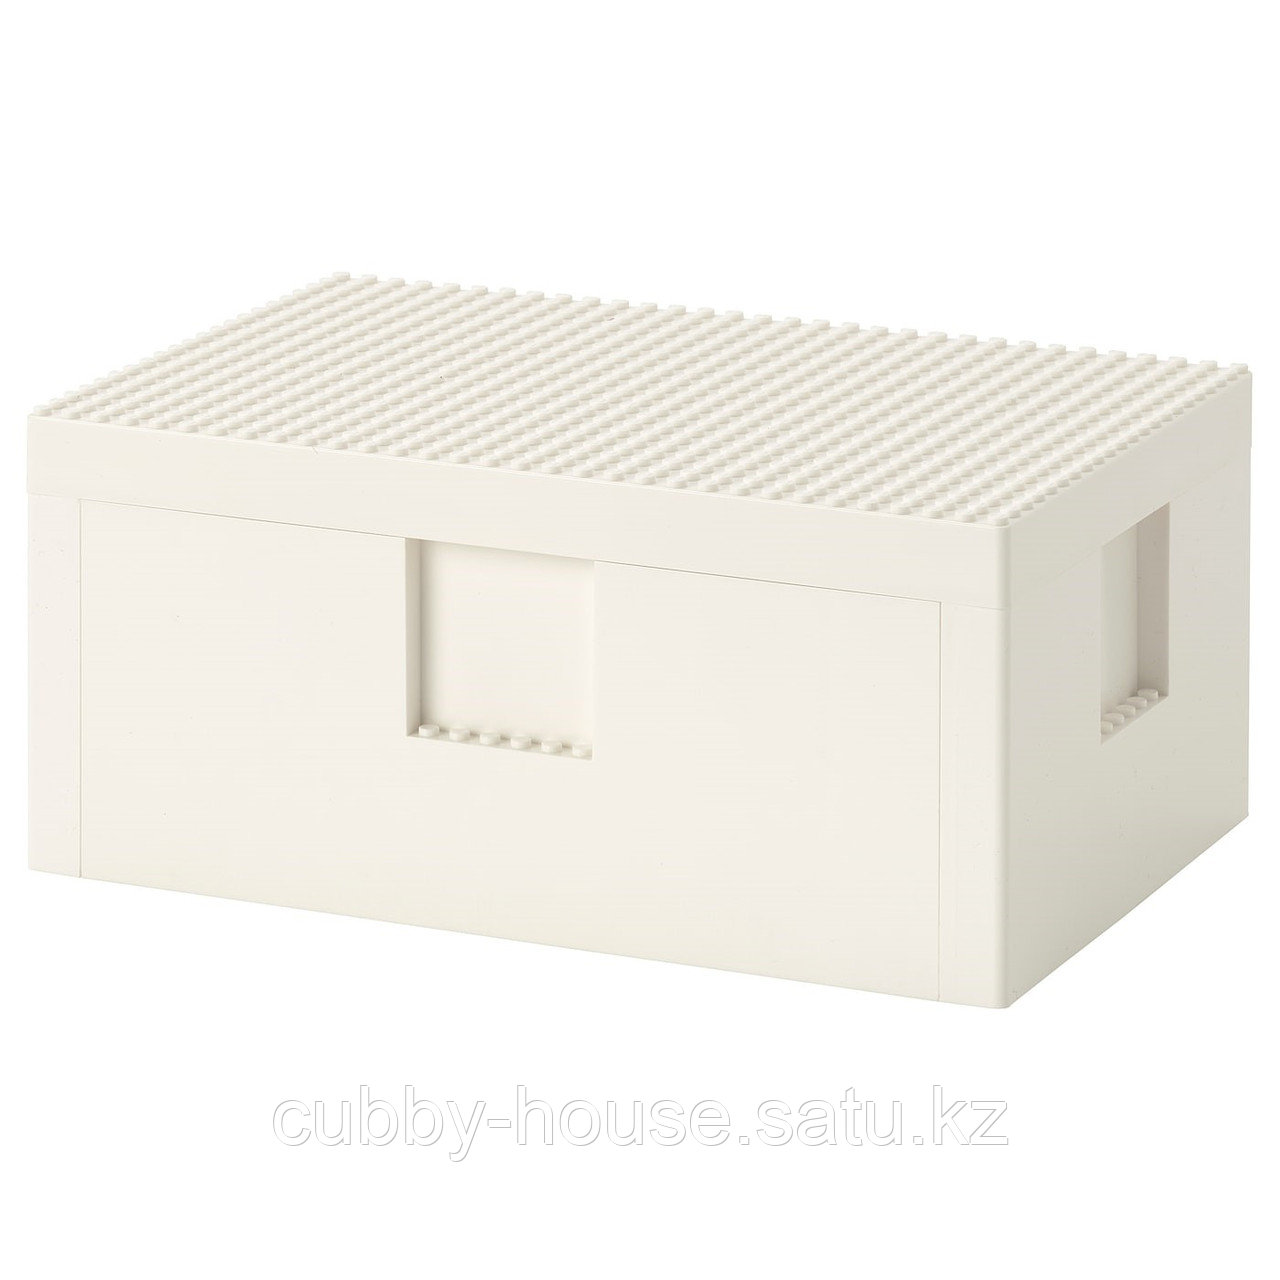 BYGGLEK БЮГГЛЕК LEGO® контейнер с крышкой, белый26x18x12 см